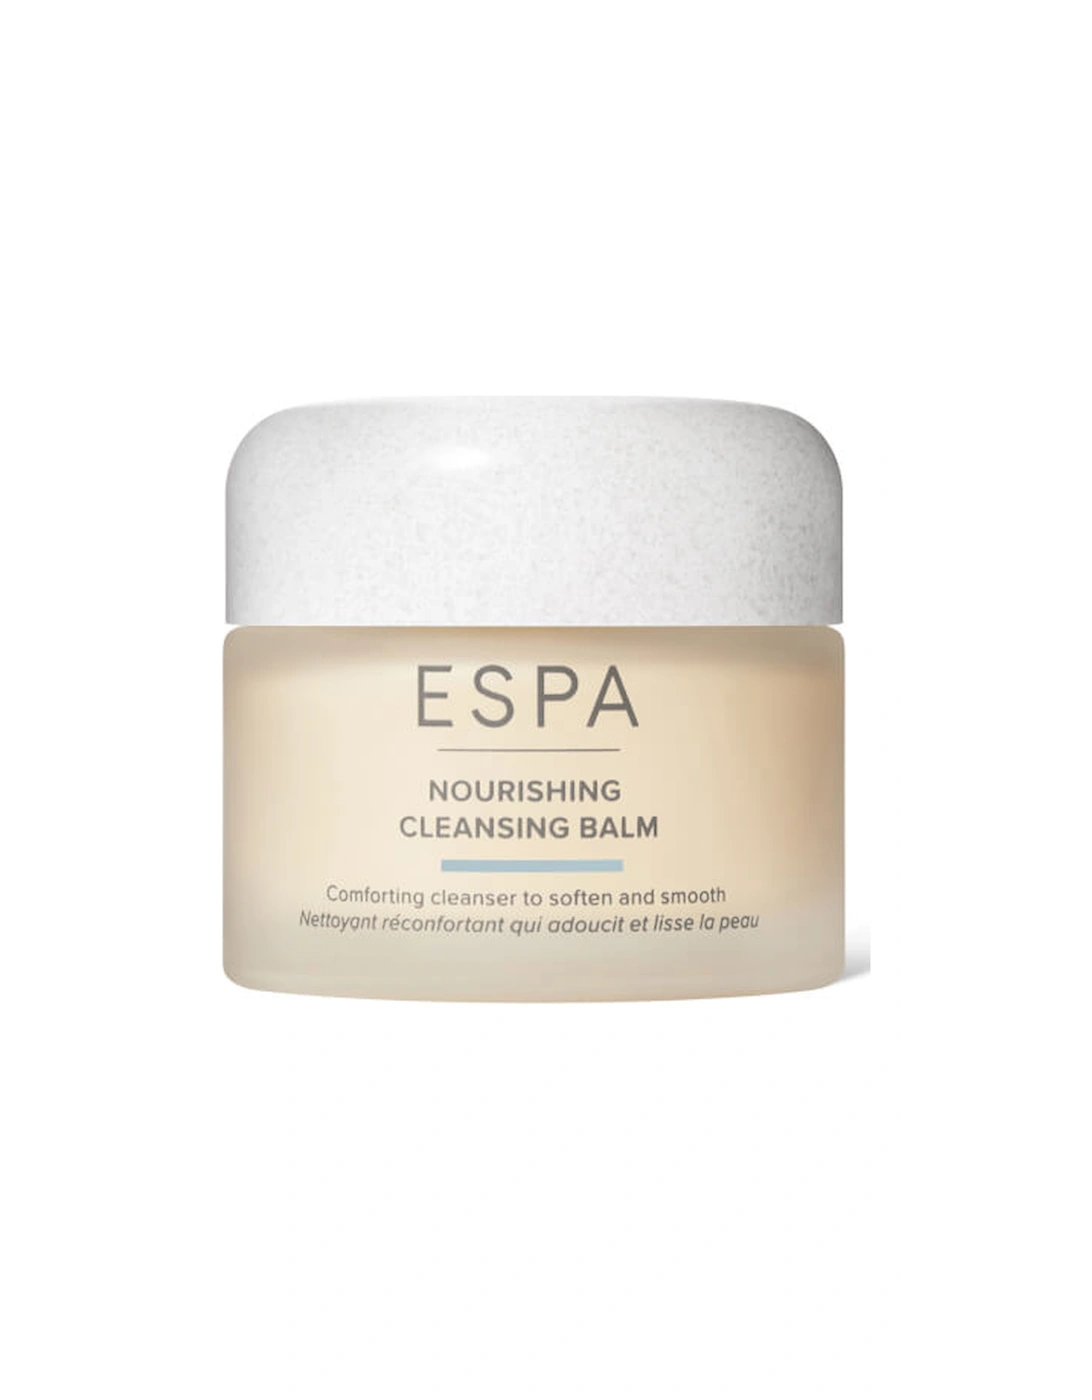 Nourishing Cleansing Balm 50g - ESPA, 2 of 1